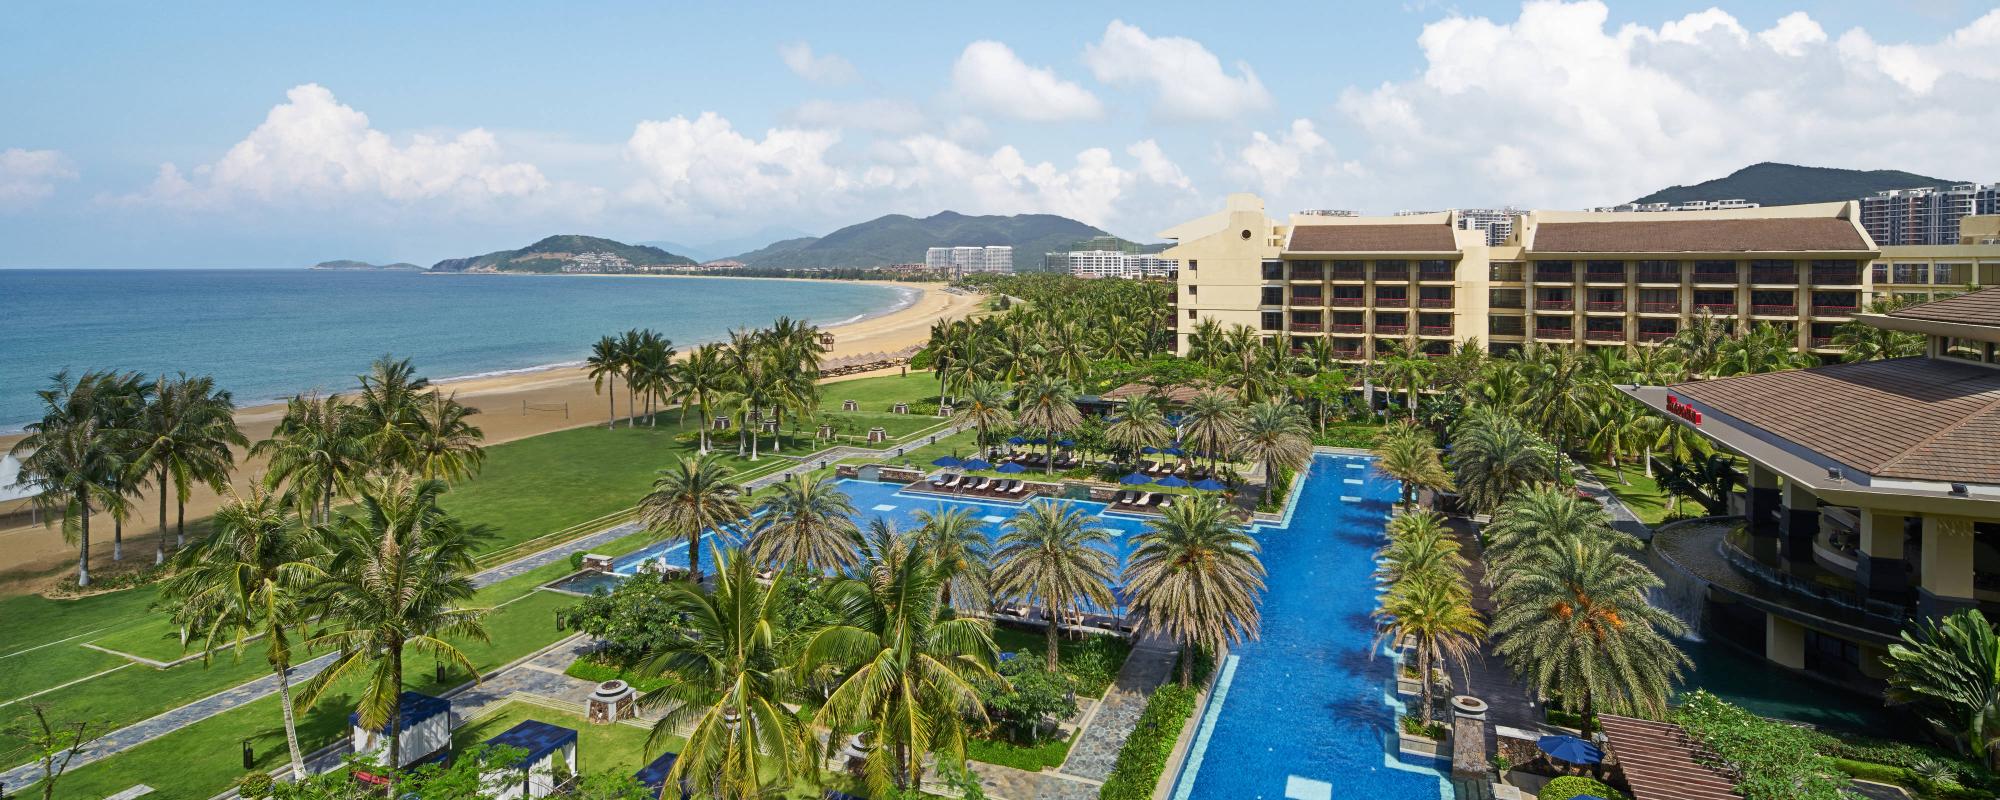 The Sheraton Shenzhou Peninsula Resort's impressive hotel situated in sensational China.